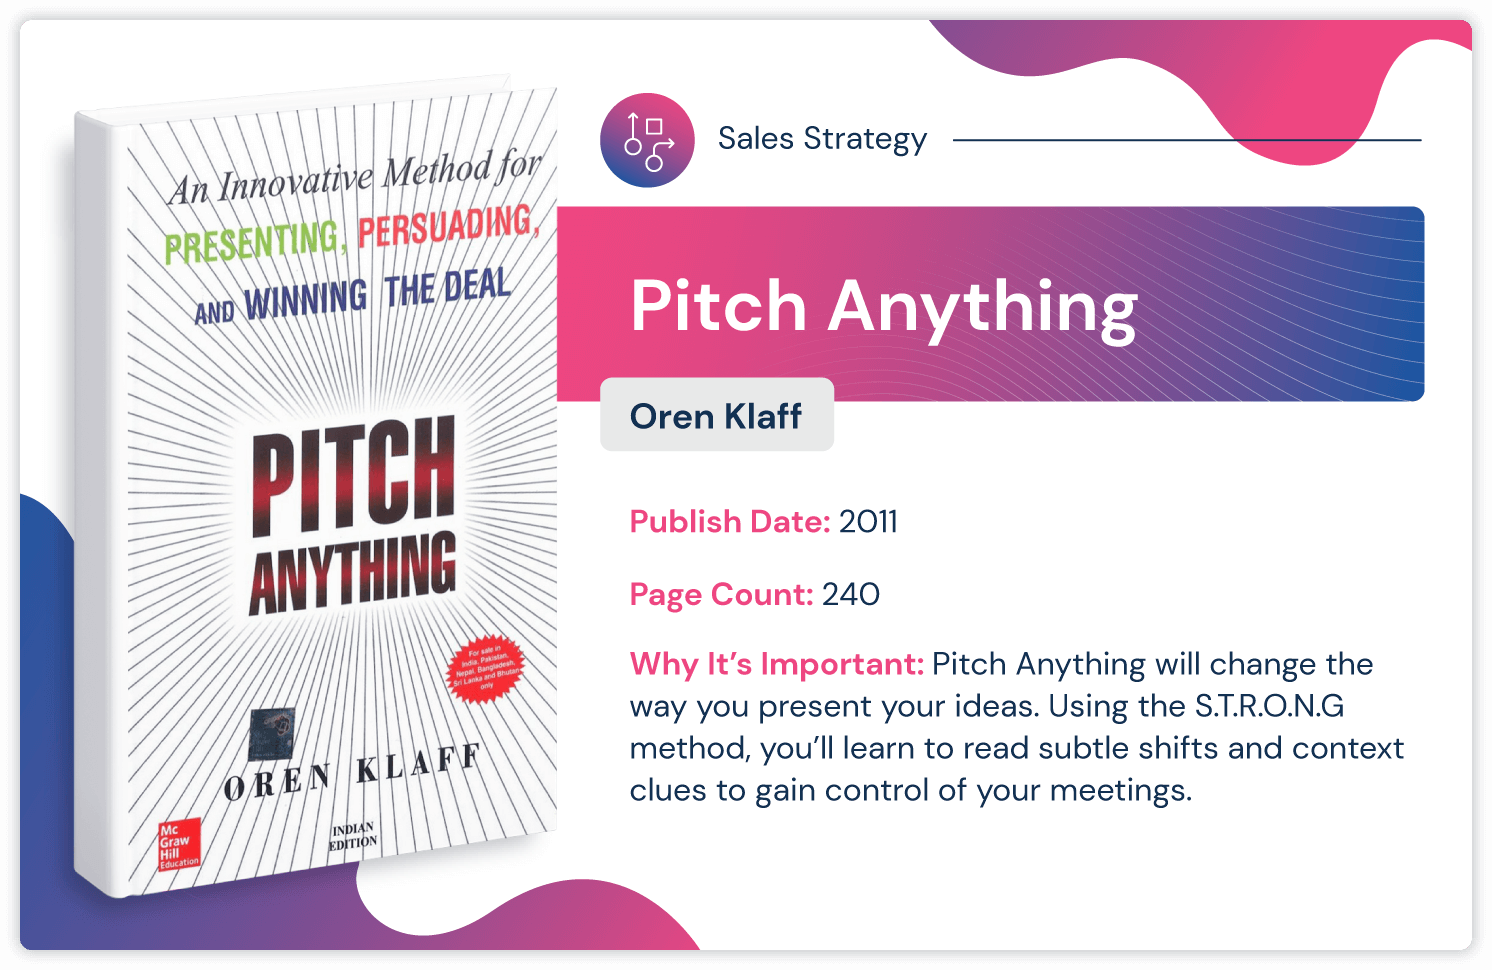 Oren Klaff 於 2011 年出版的銷售策略書籍“Pitch Anything”，長達 240 頁。